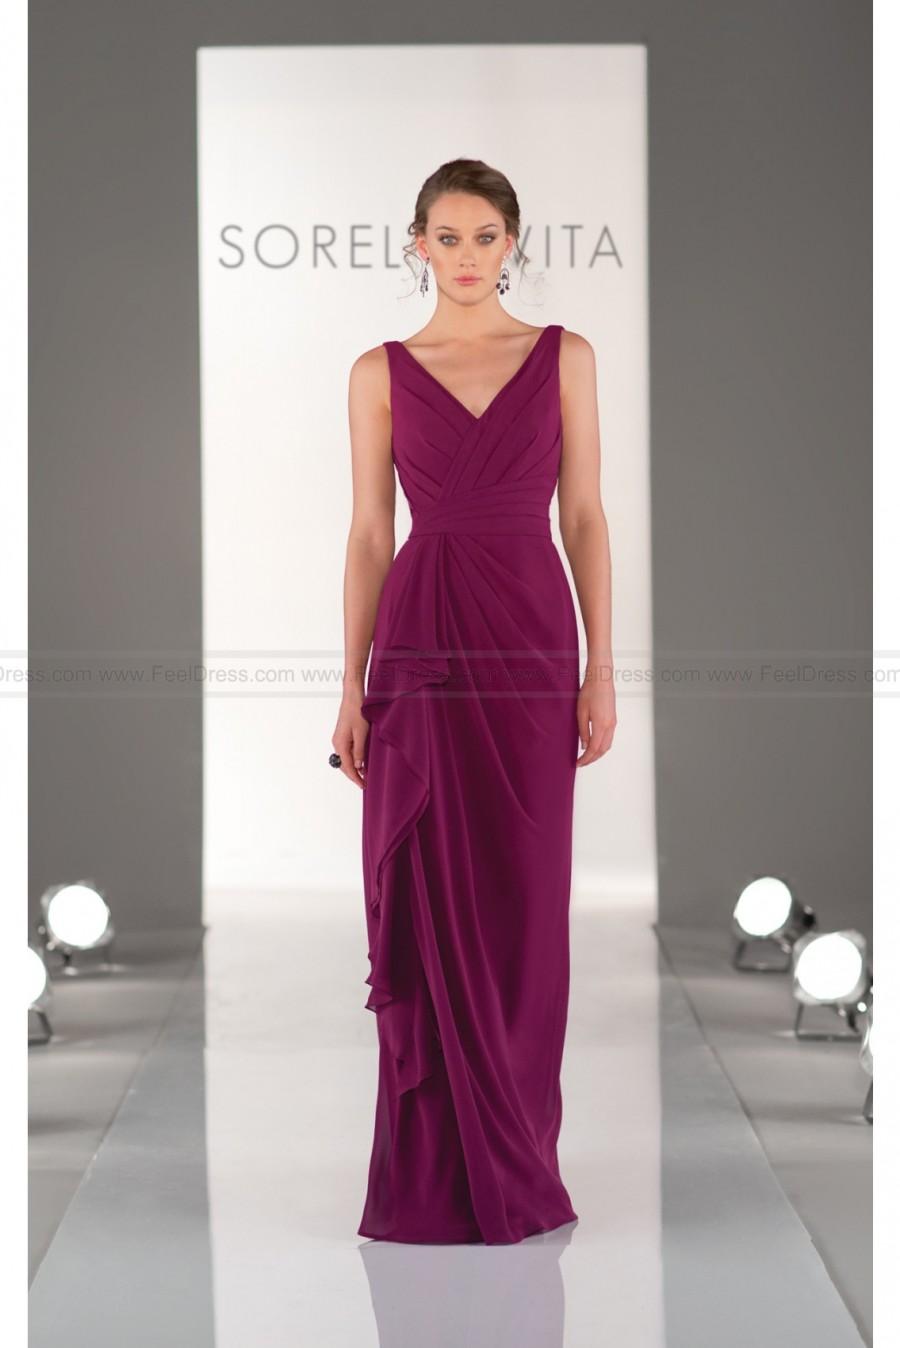 Mariage - Sorella Vita Purple Bridesmaid Dress Style 8338